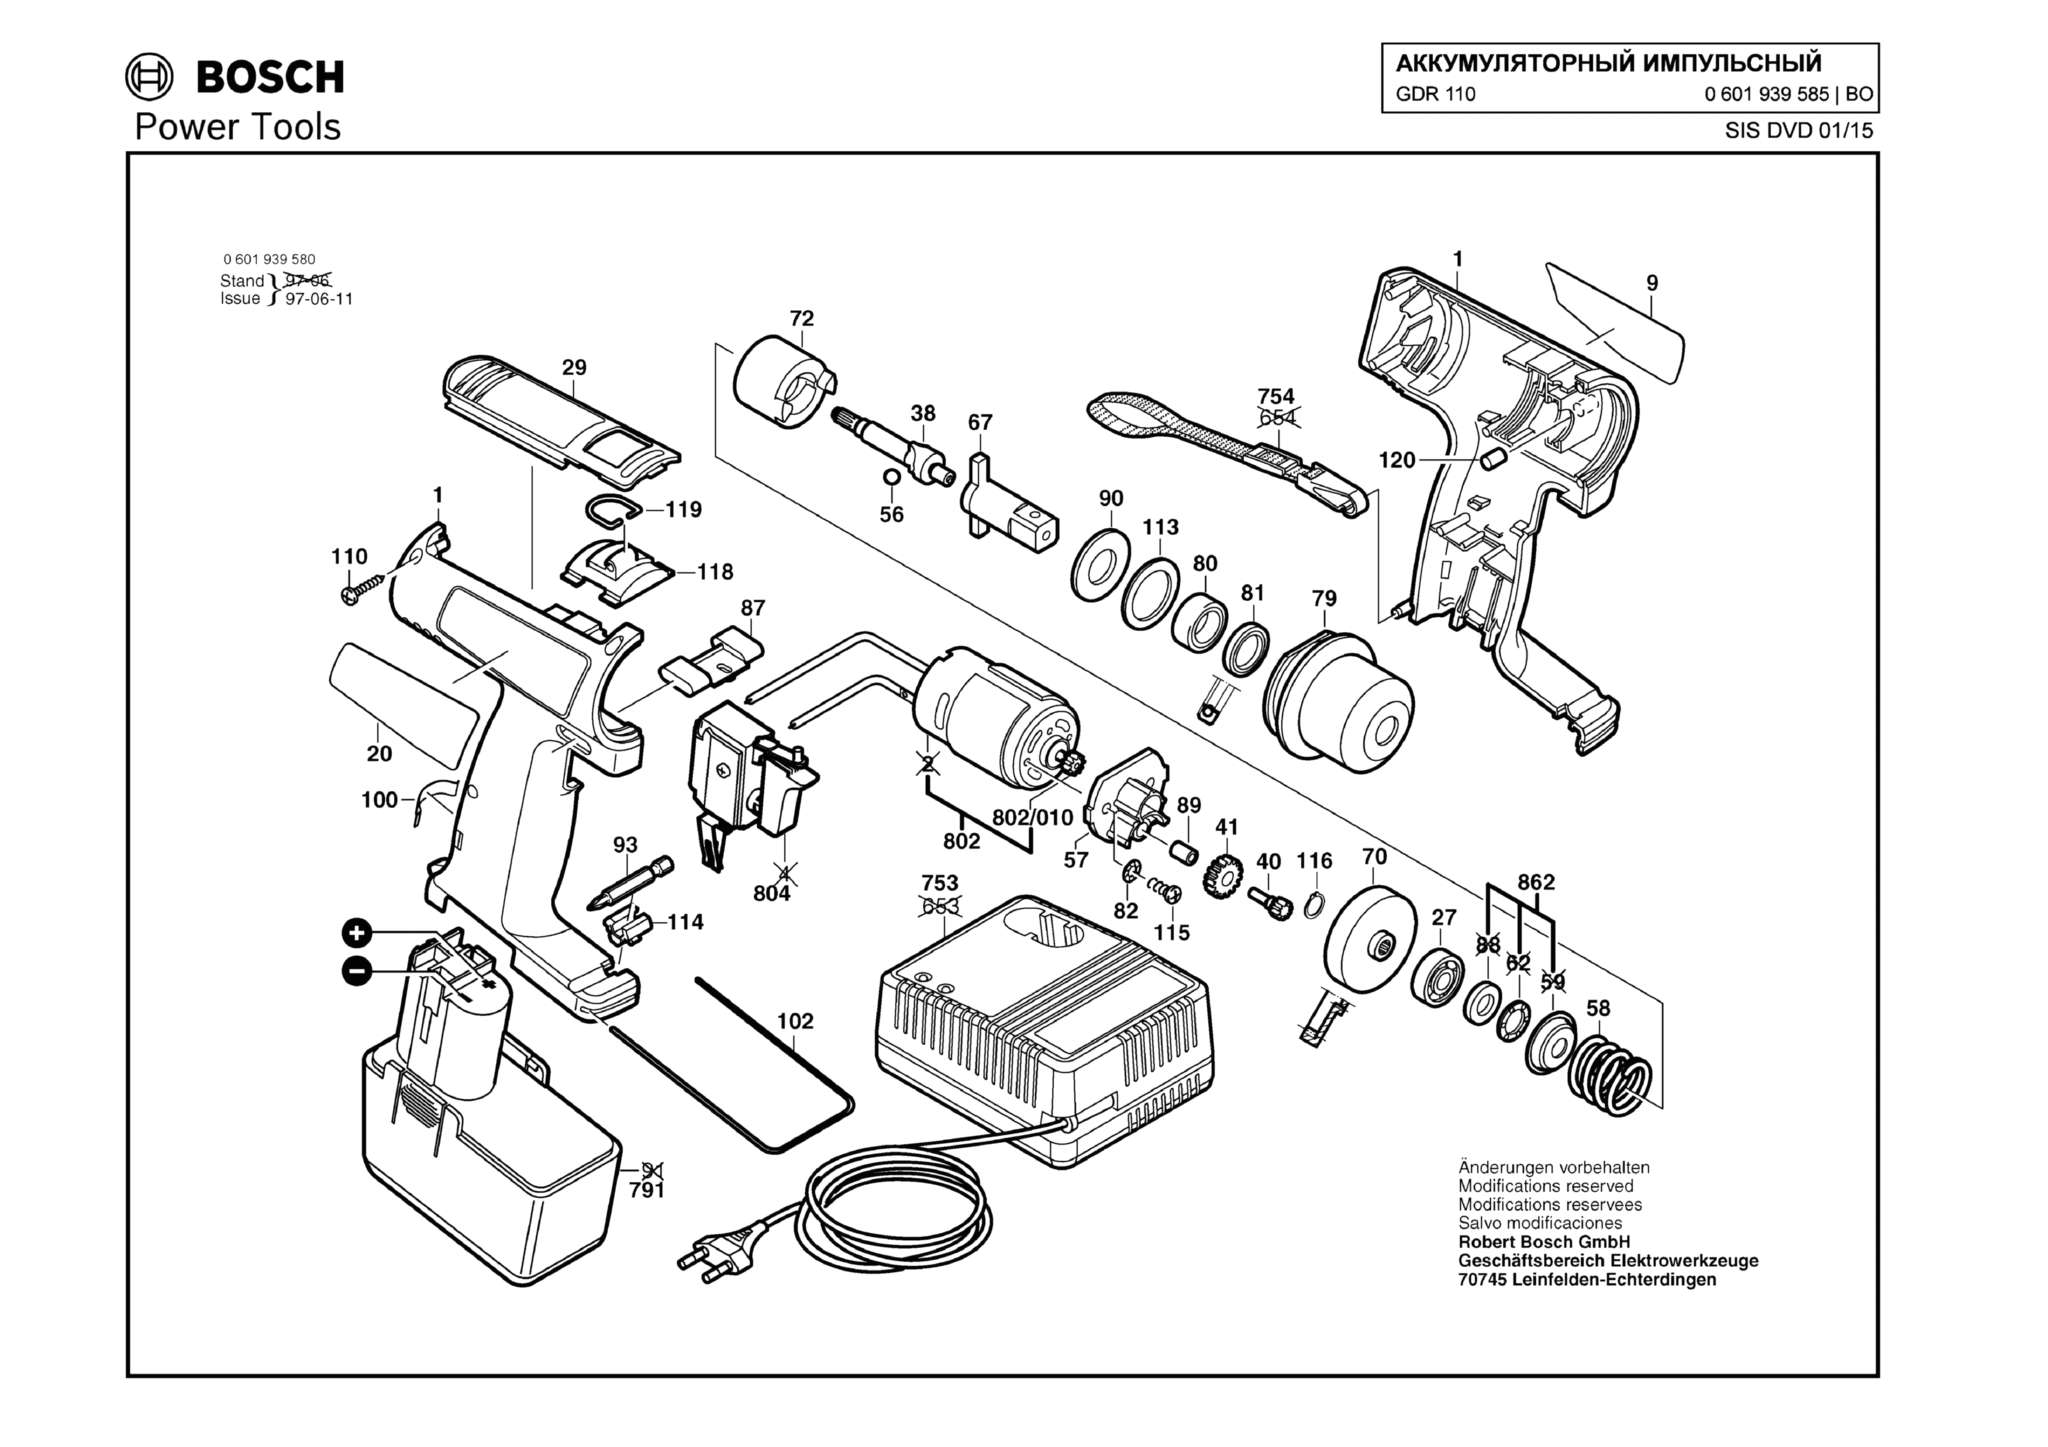 Запчасти, схема и деталировка Bosch GDR 110 (ТИП 0601939585)